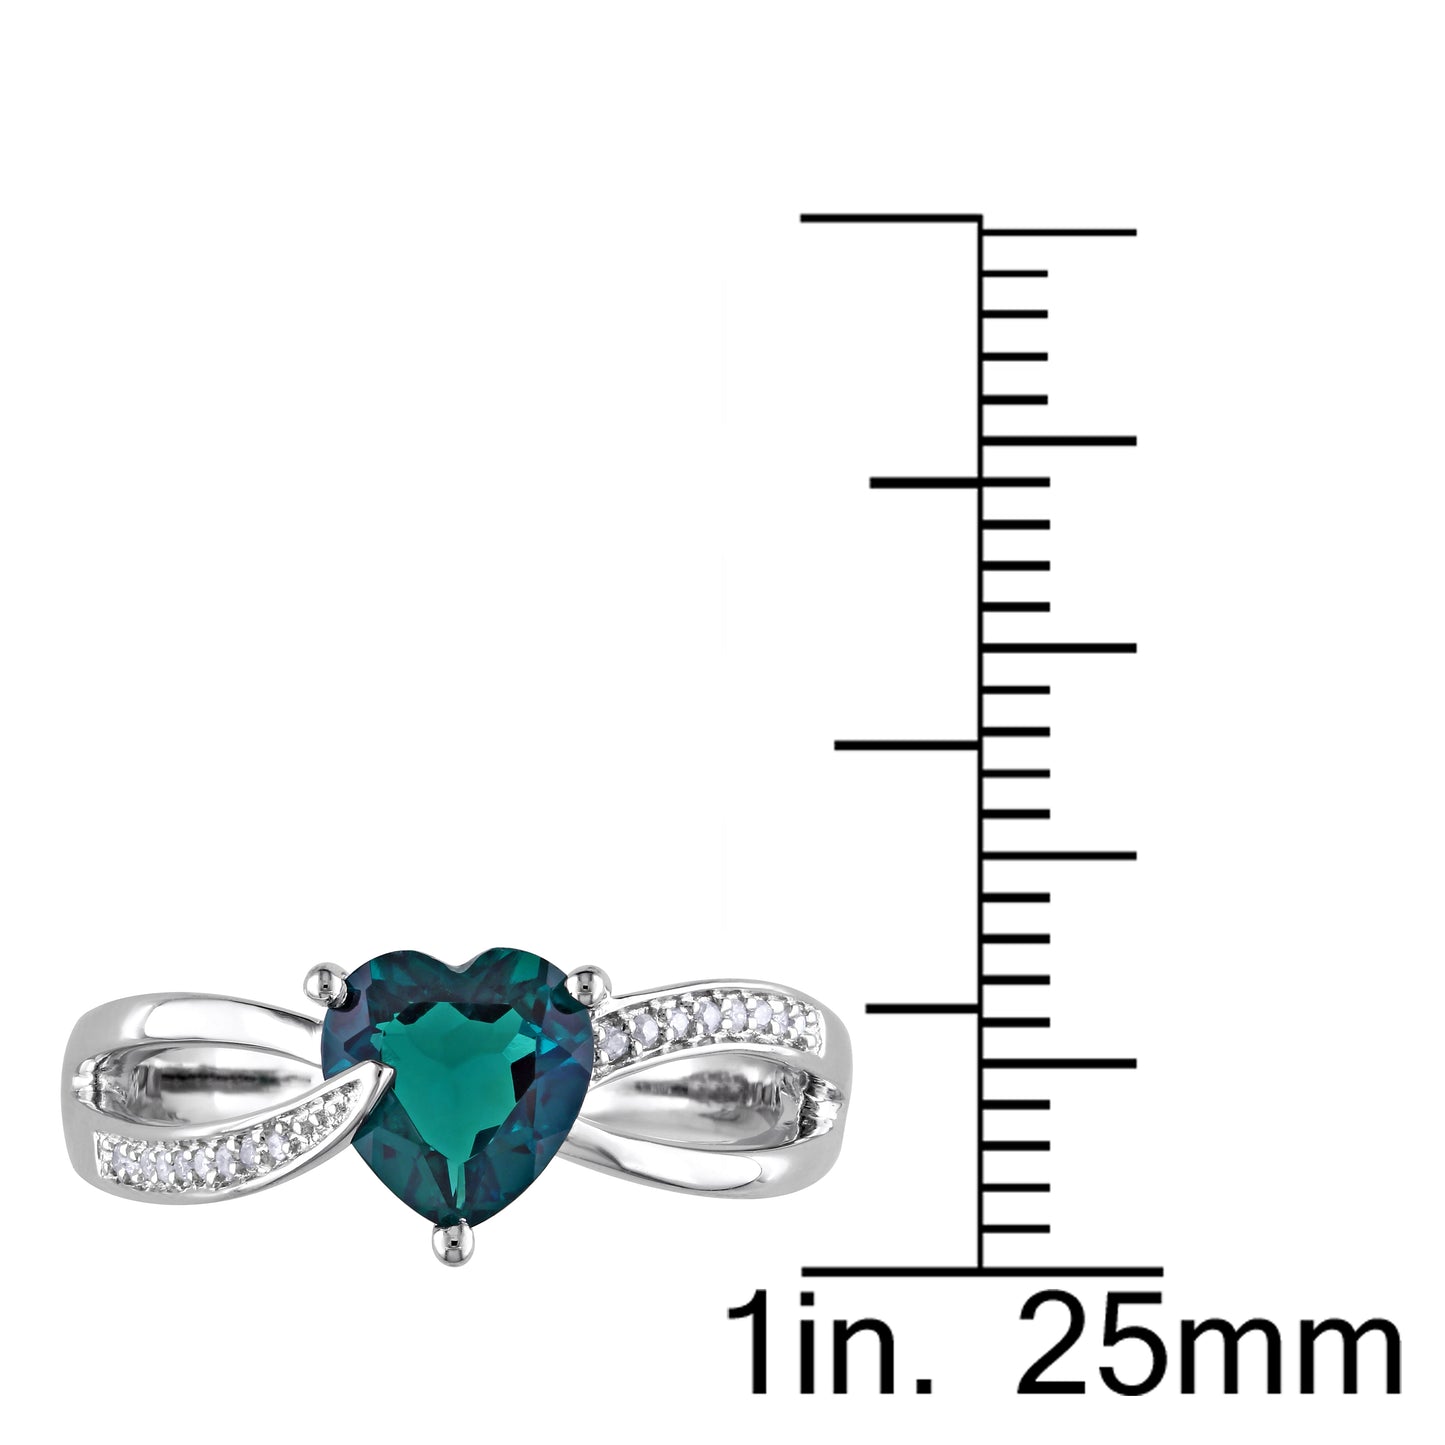 Heart Emerald & Diamond Ring in Sterling Silver